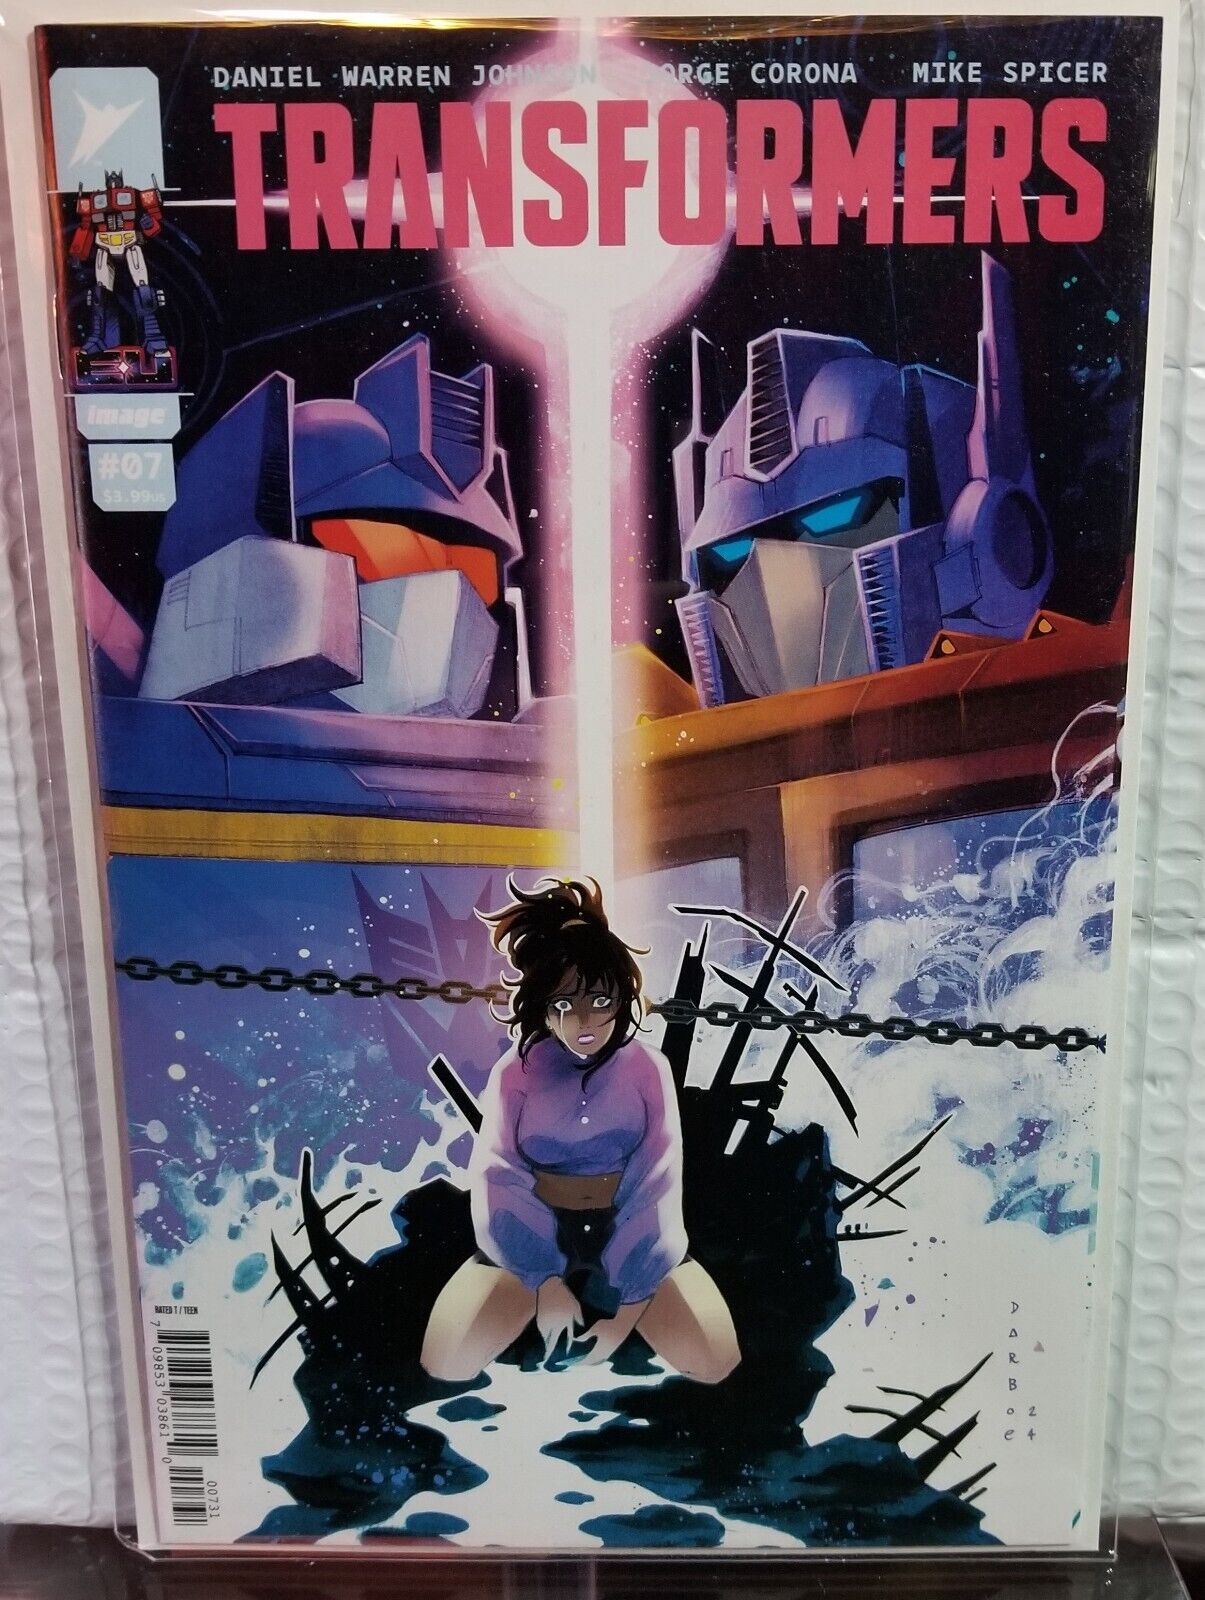 Transformers #7 - 1:10 Incentive - Karen Darboe variant